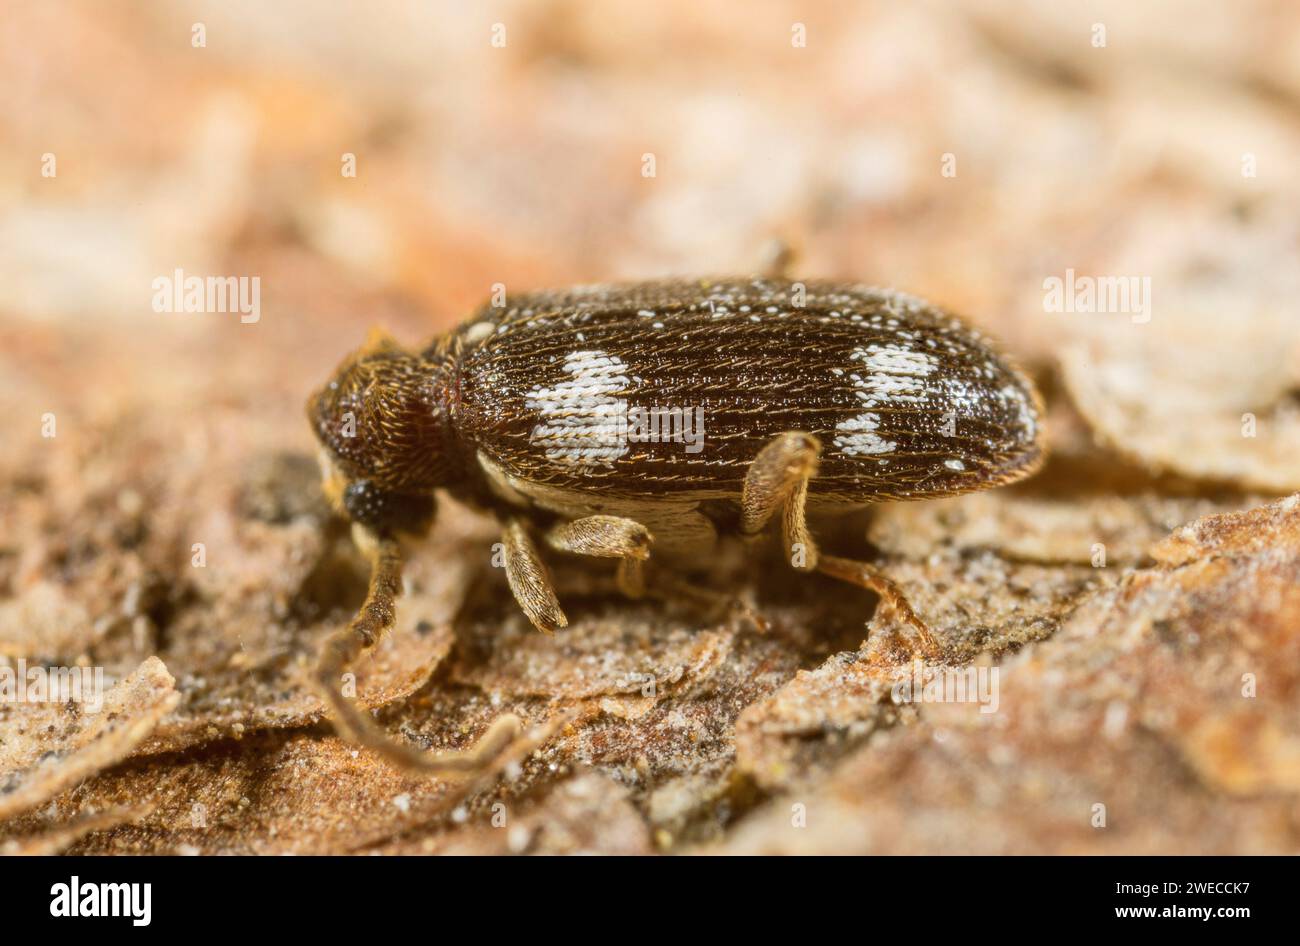 Spider beetle (Ptinus sexpunctatus), side view, Germany Stock Photo